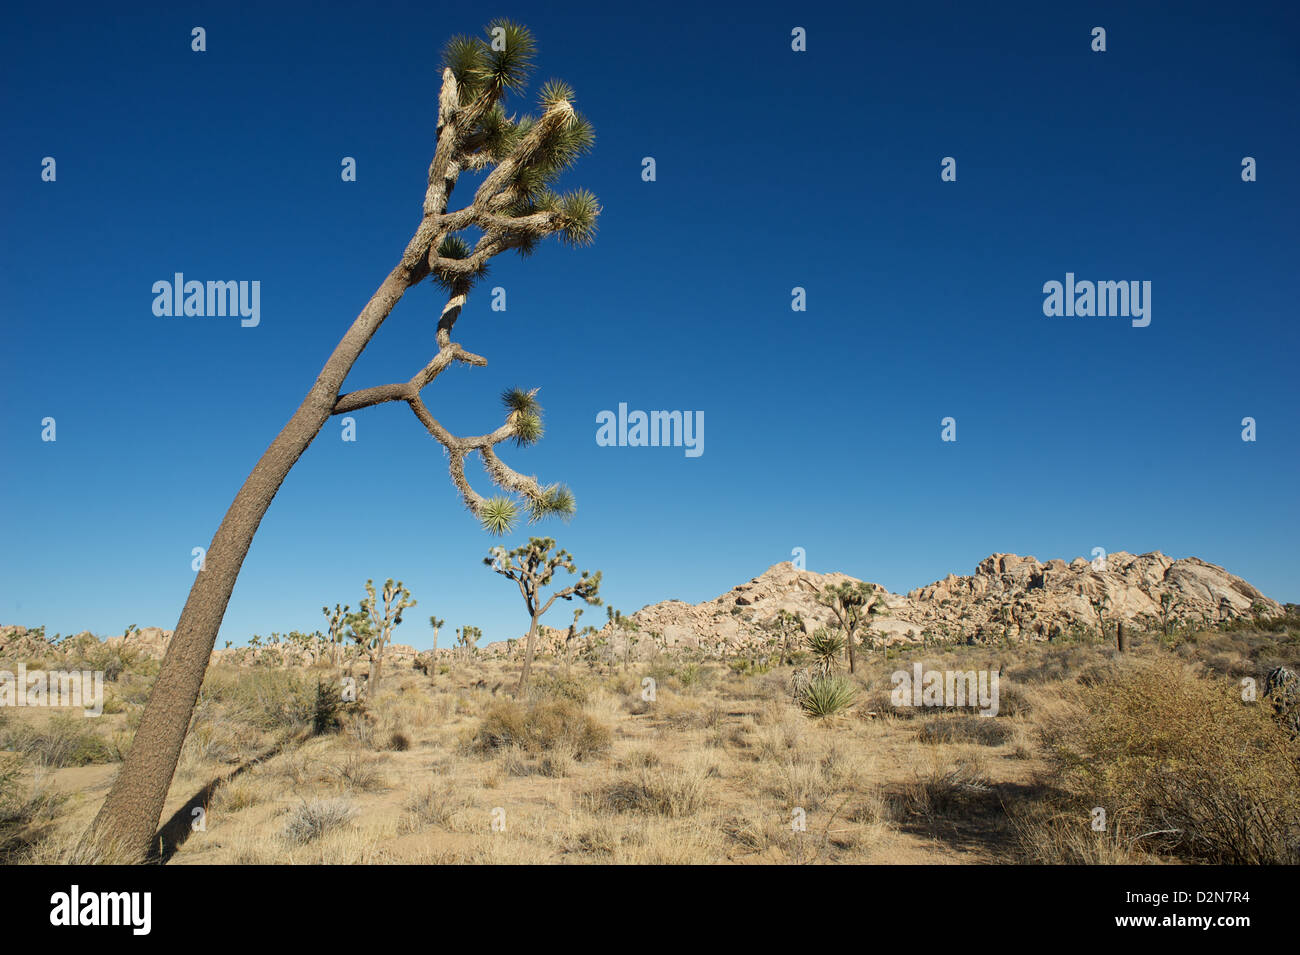 Joshua Tree paisaje del desierto del sur de California Foto de stock